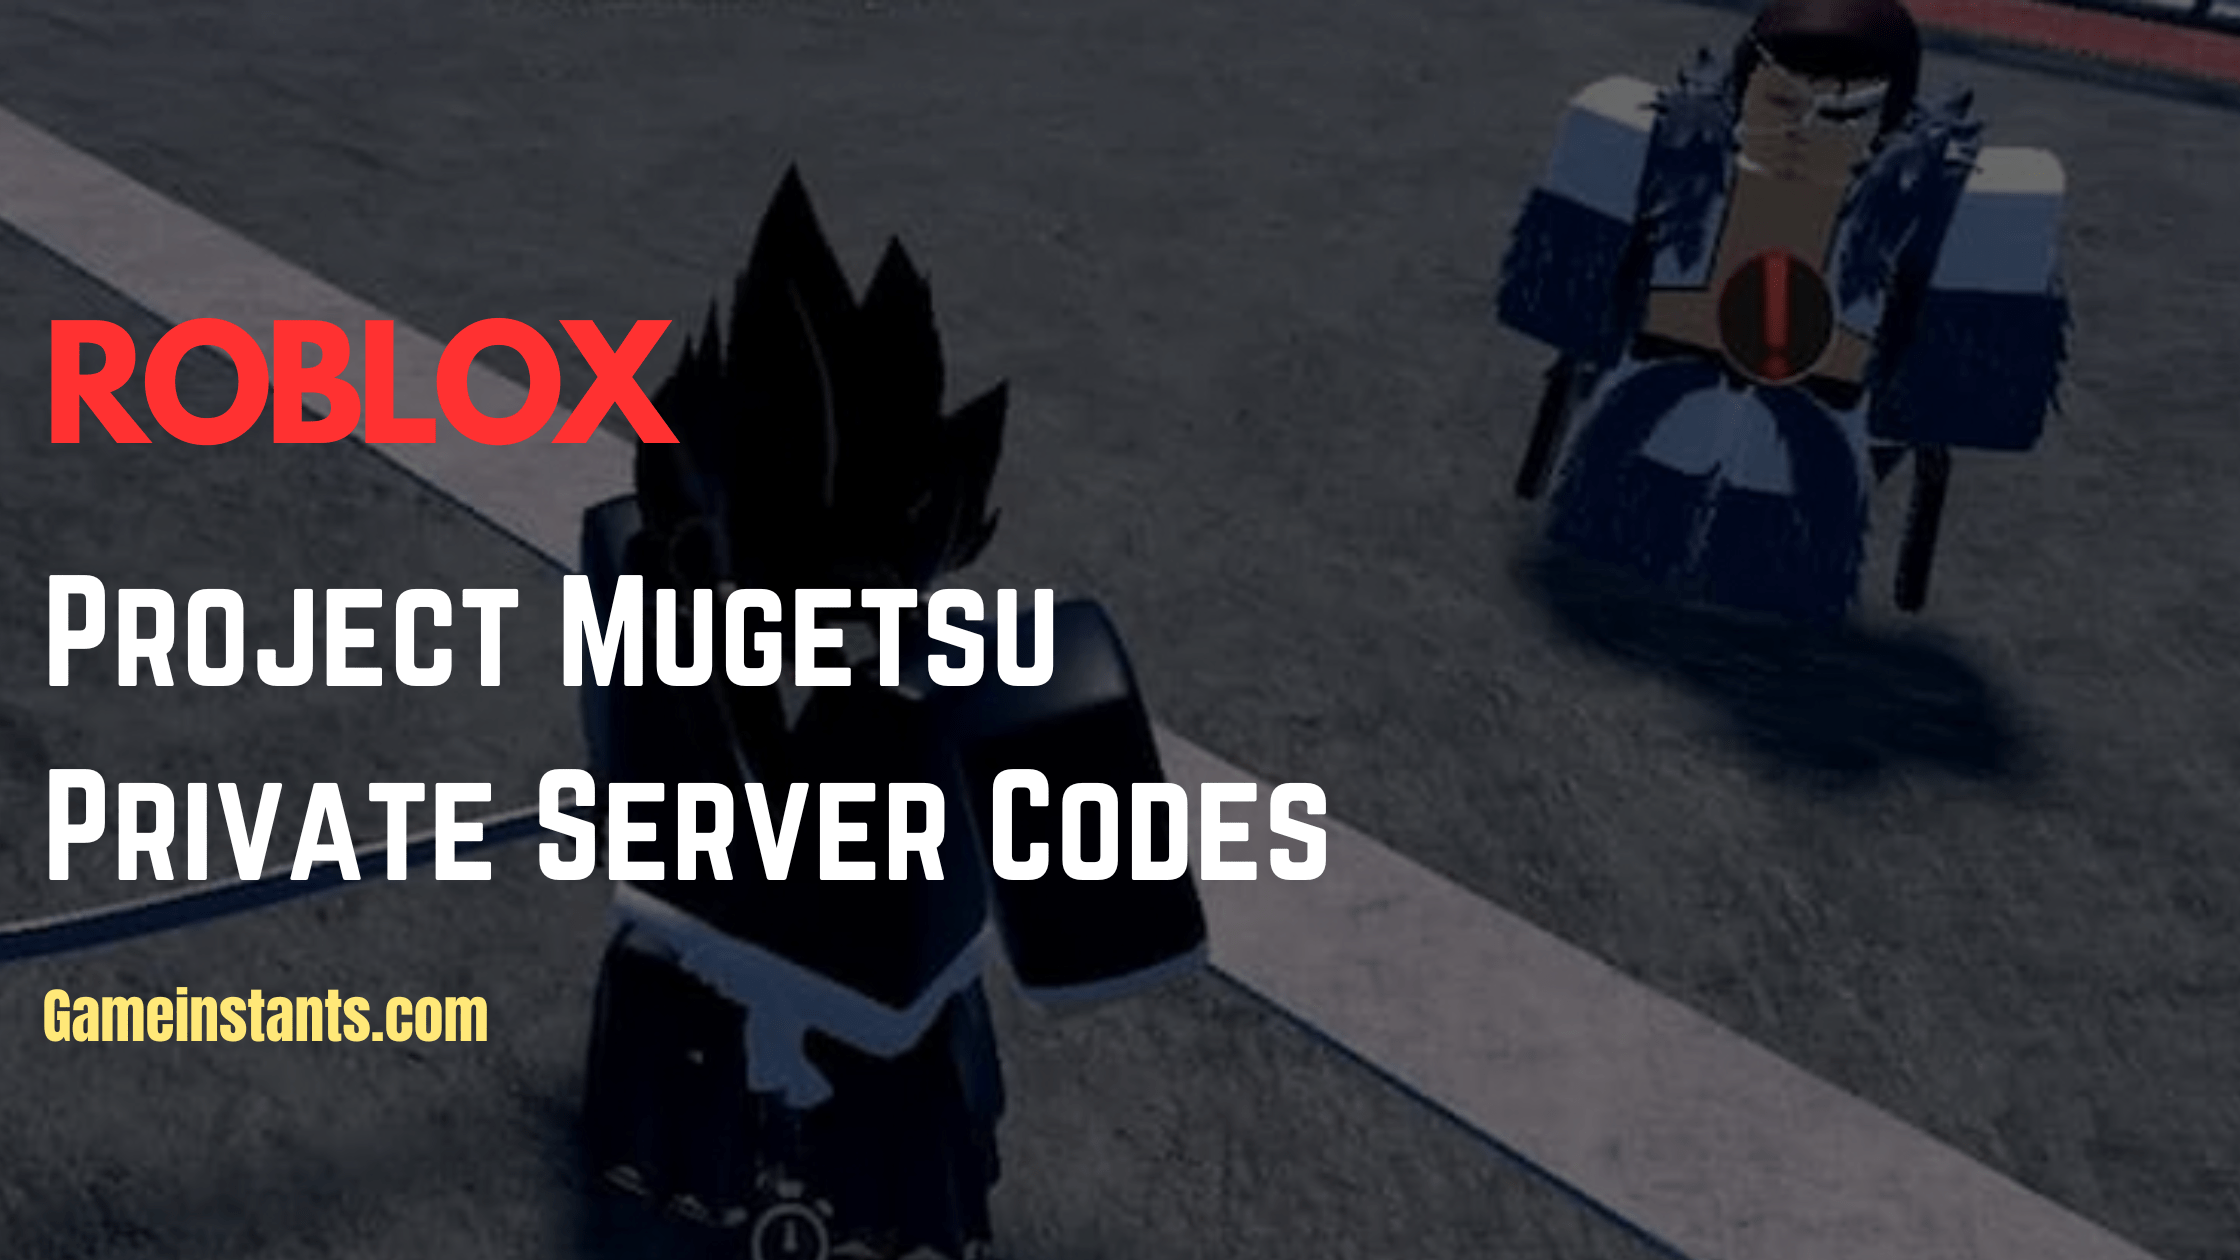 Roblox Project Mugetsu Private Server Codes